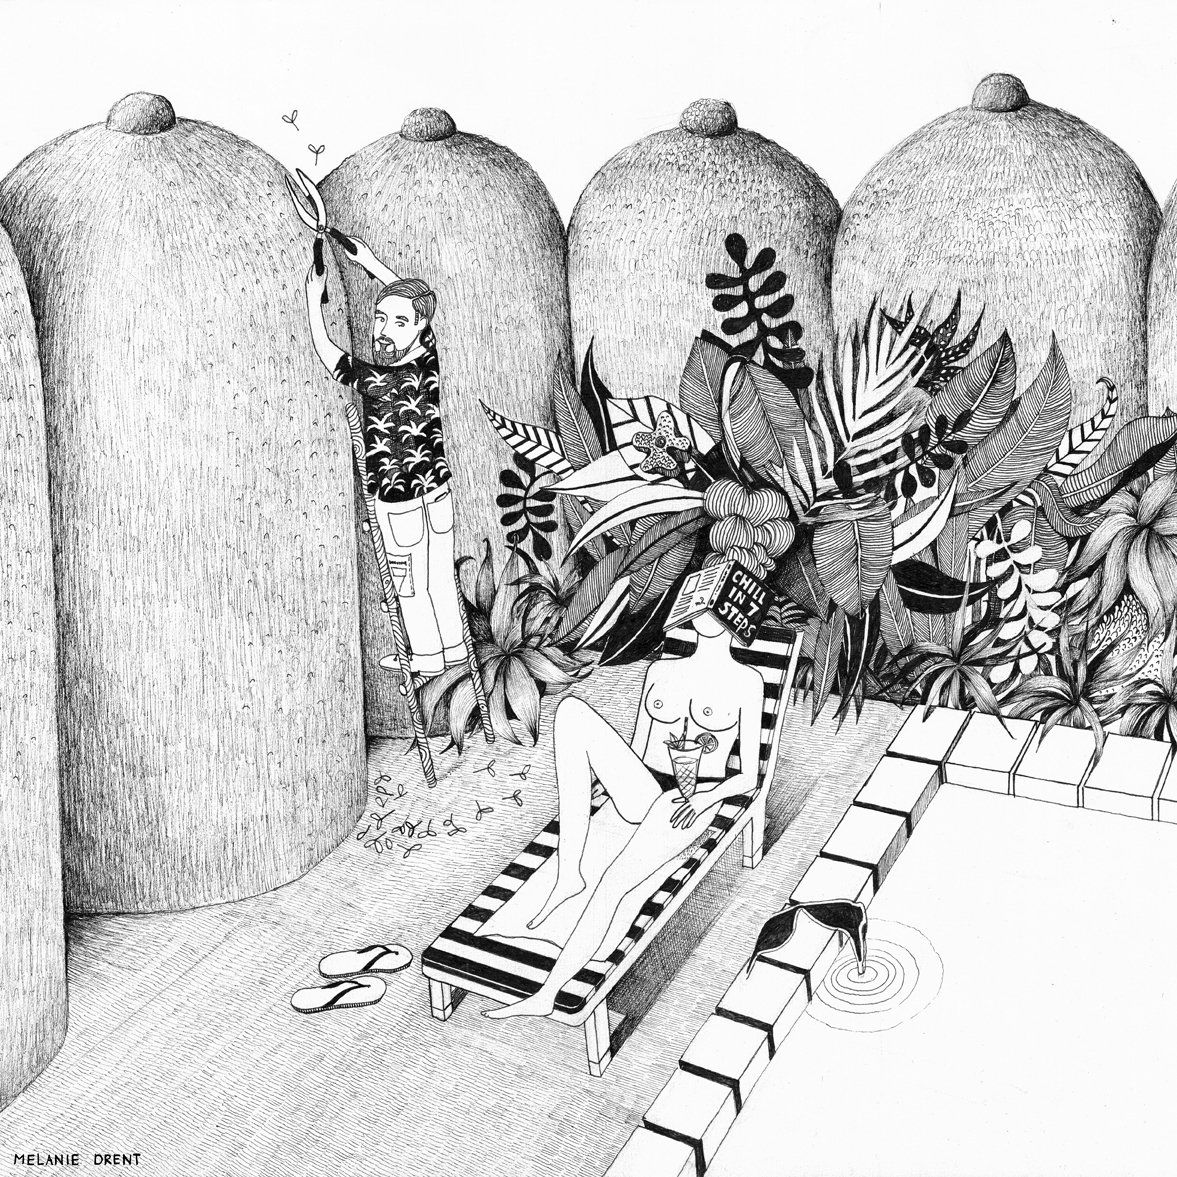 humorous black and white illustration Melanie Drent